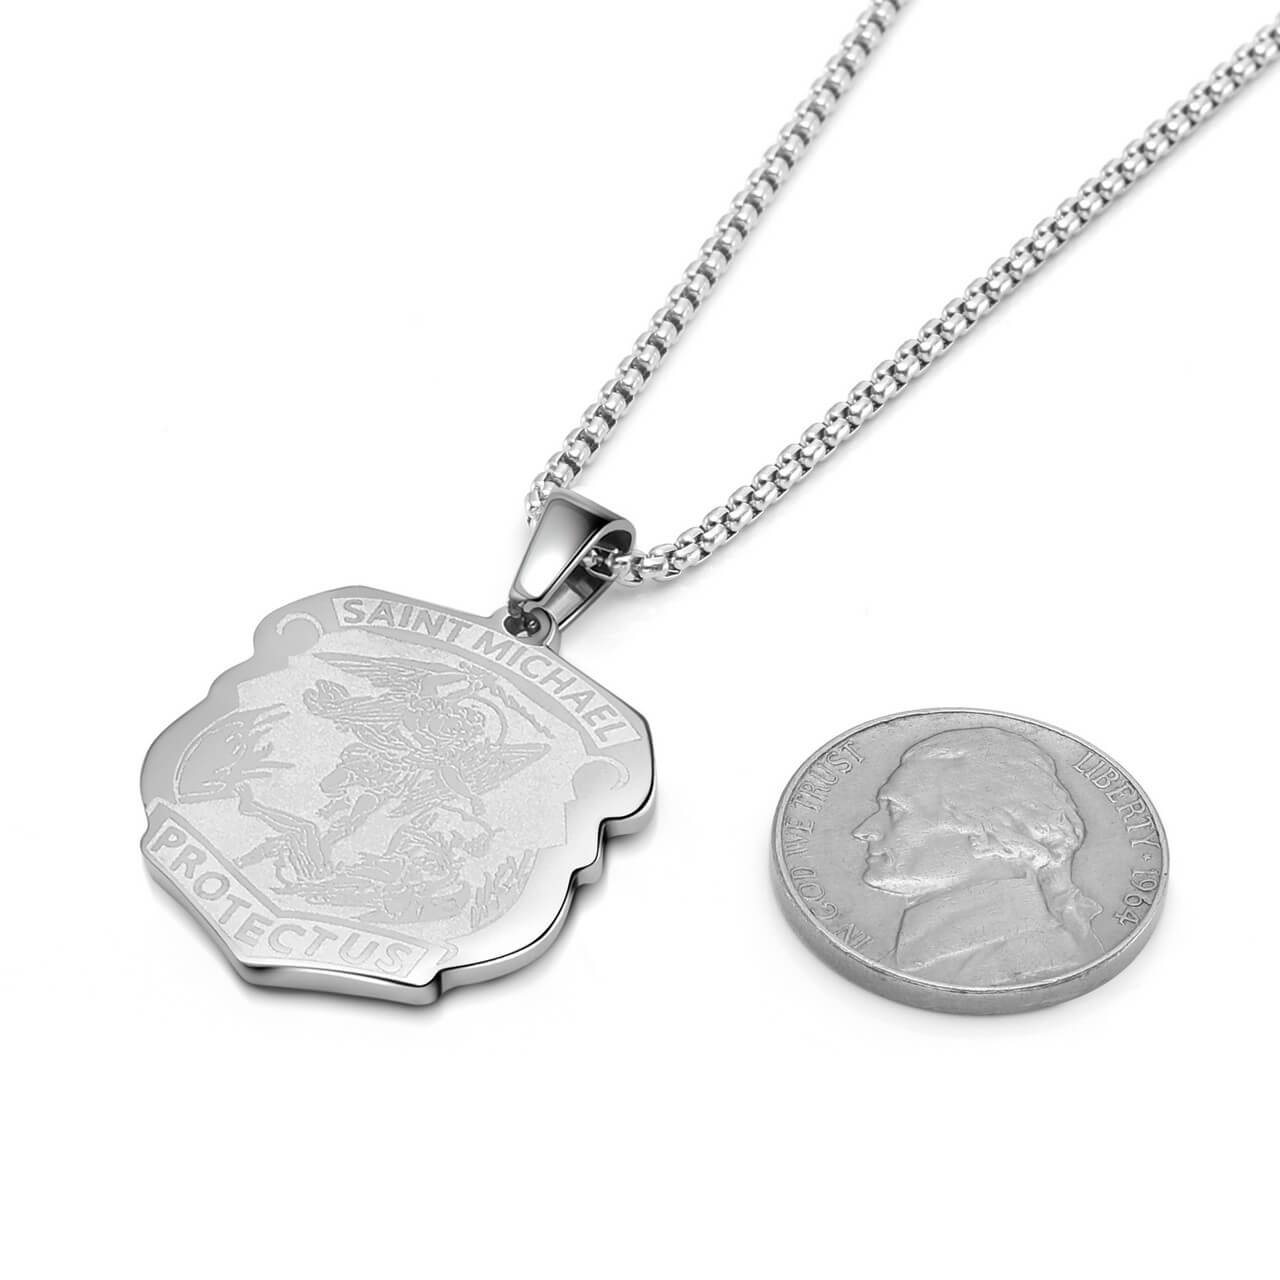 Eudora 925 Sterling Silver Saint Michael Necklace Archangel Amulet Cross  Shield Pendant Personality Jewelry Gift for Men Women - AliExpress